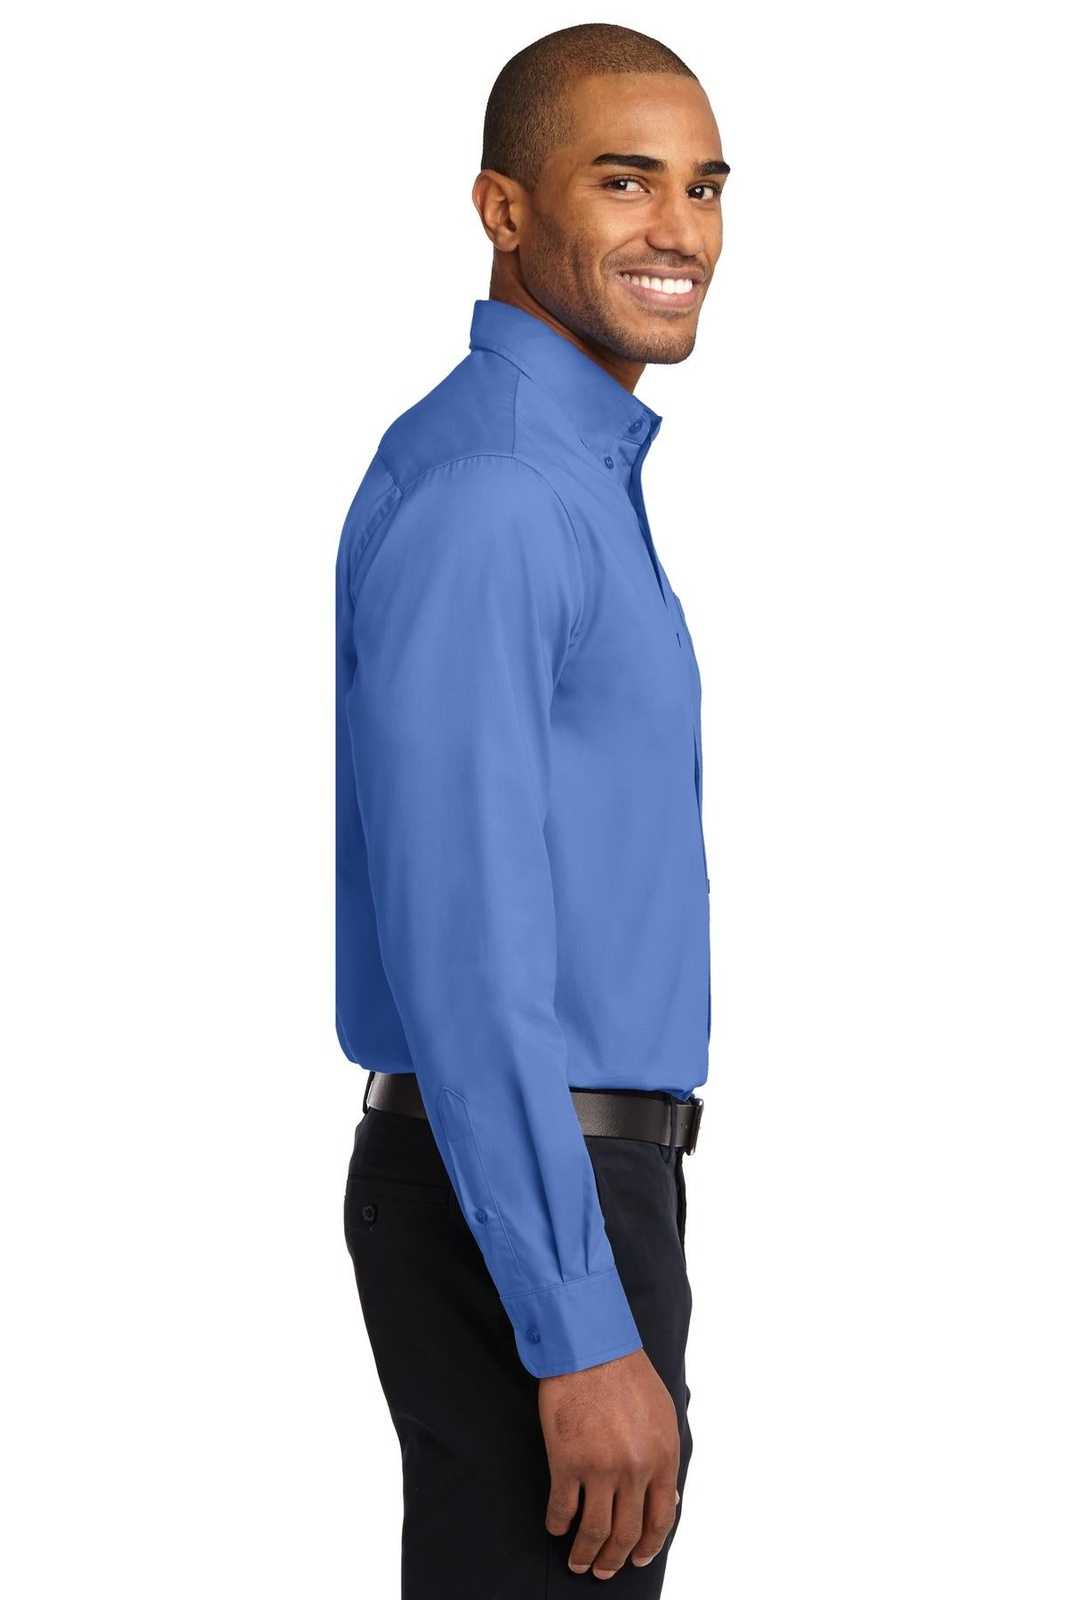 Port Authority S608 Long Sleeve Easy Care Shirt - Ultramarine Blue - HIT a Double - 3